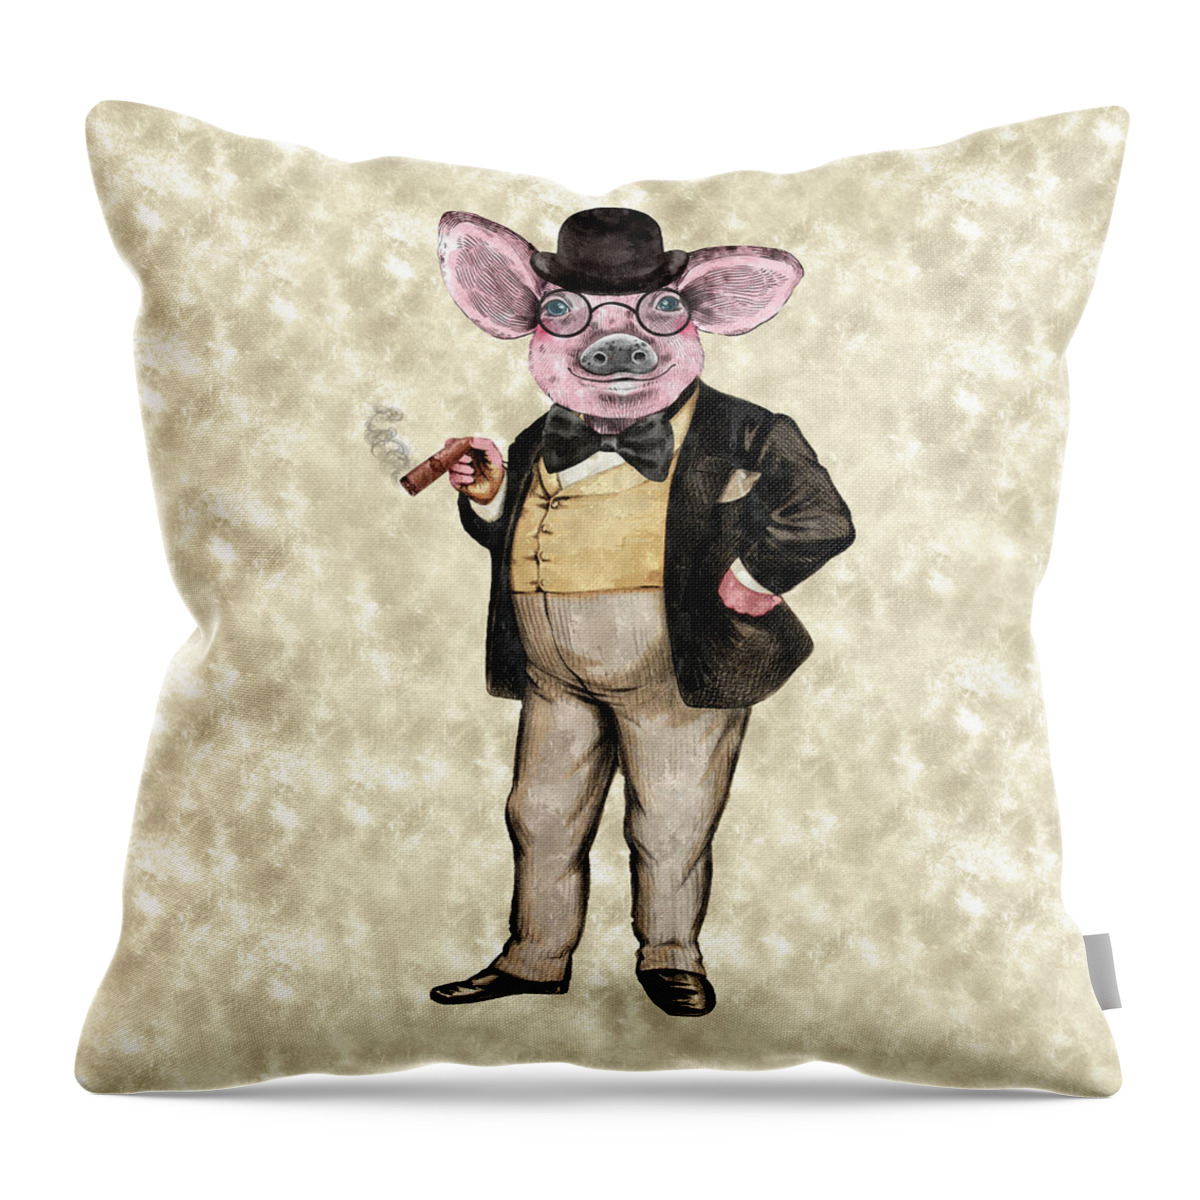 Pig Throw Pillow featuring the digital art Living High on the Hog by Doreen Erhardt